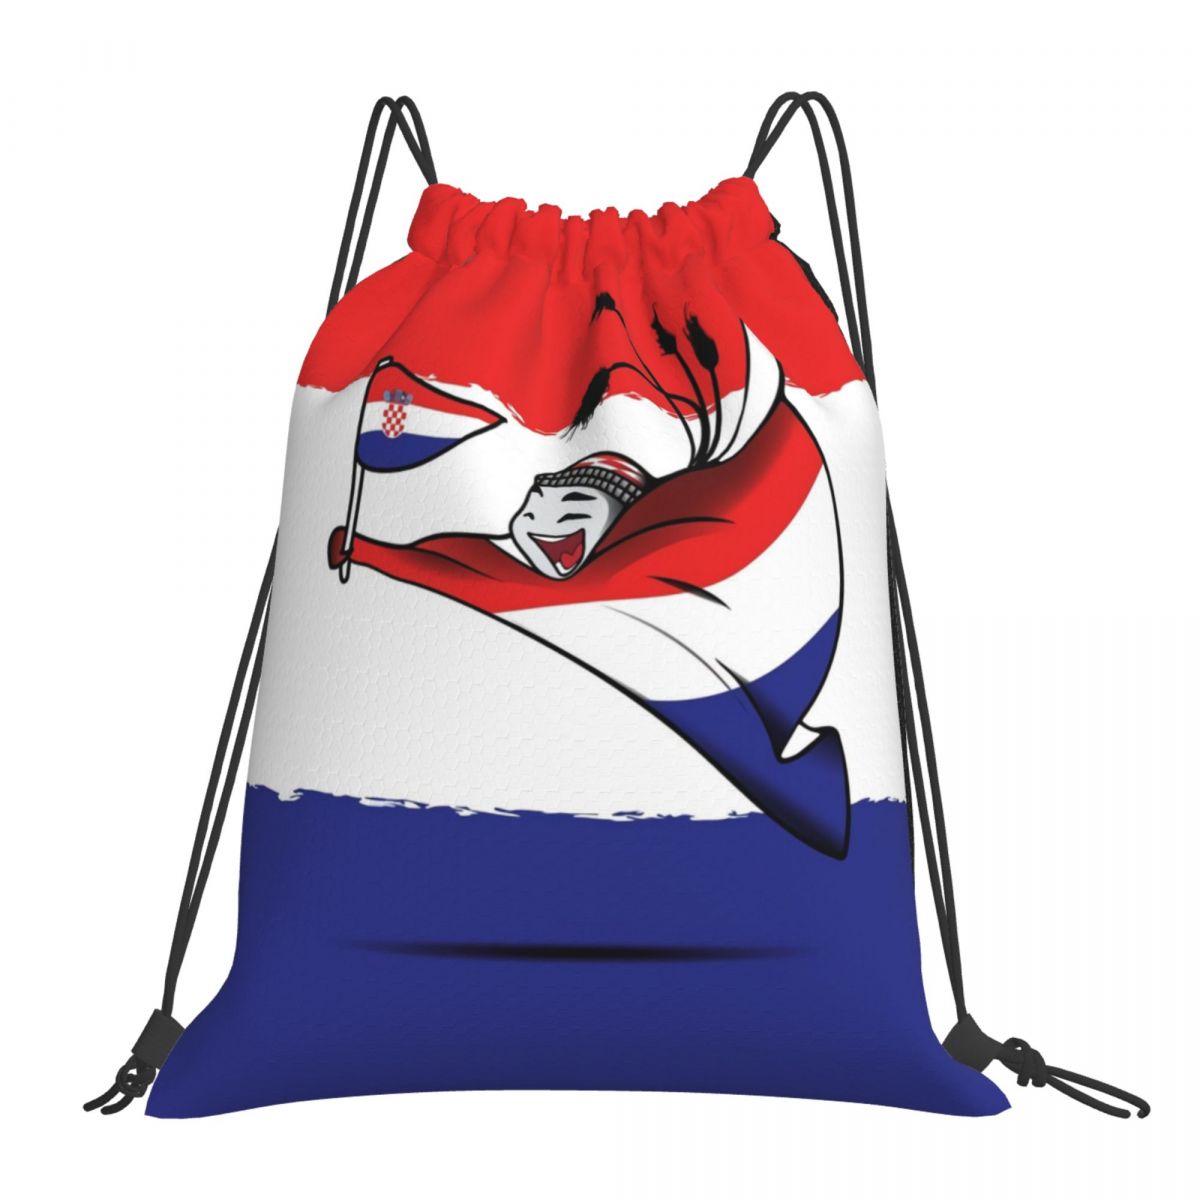 Croatia World Cup 2022 Mascot Unisex Drawstring Backpack Bag Travel Sackpack